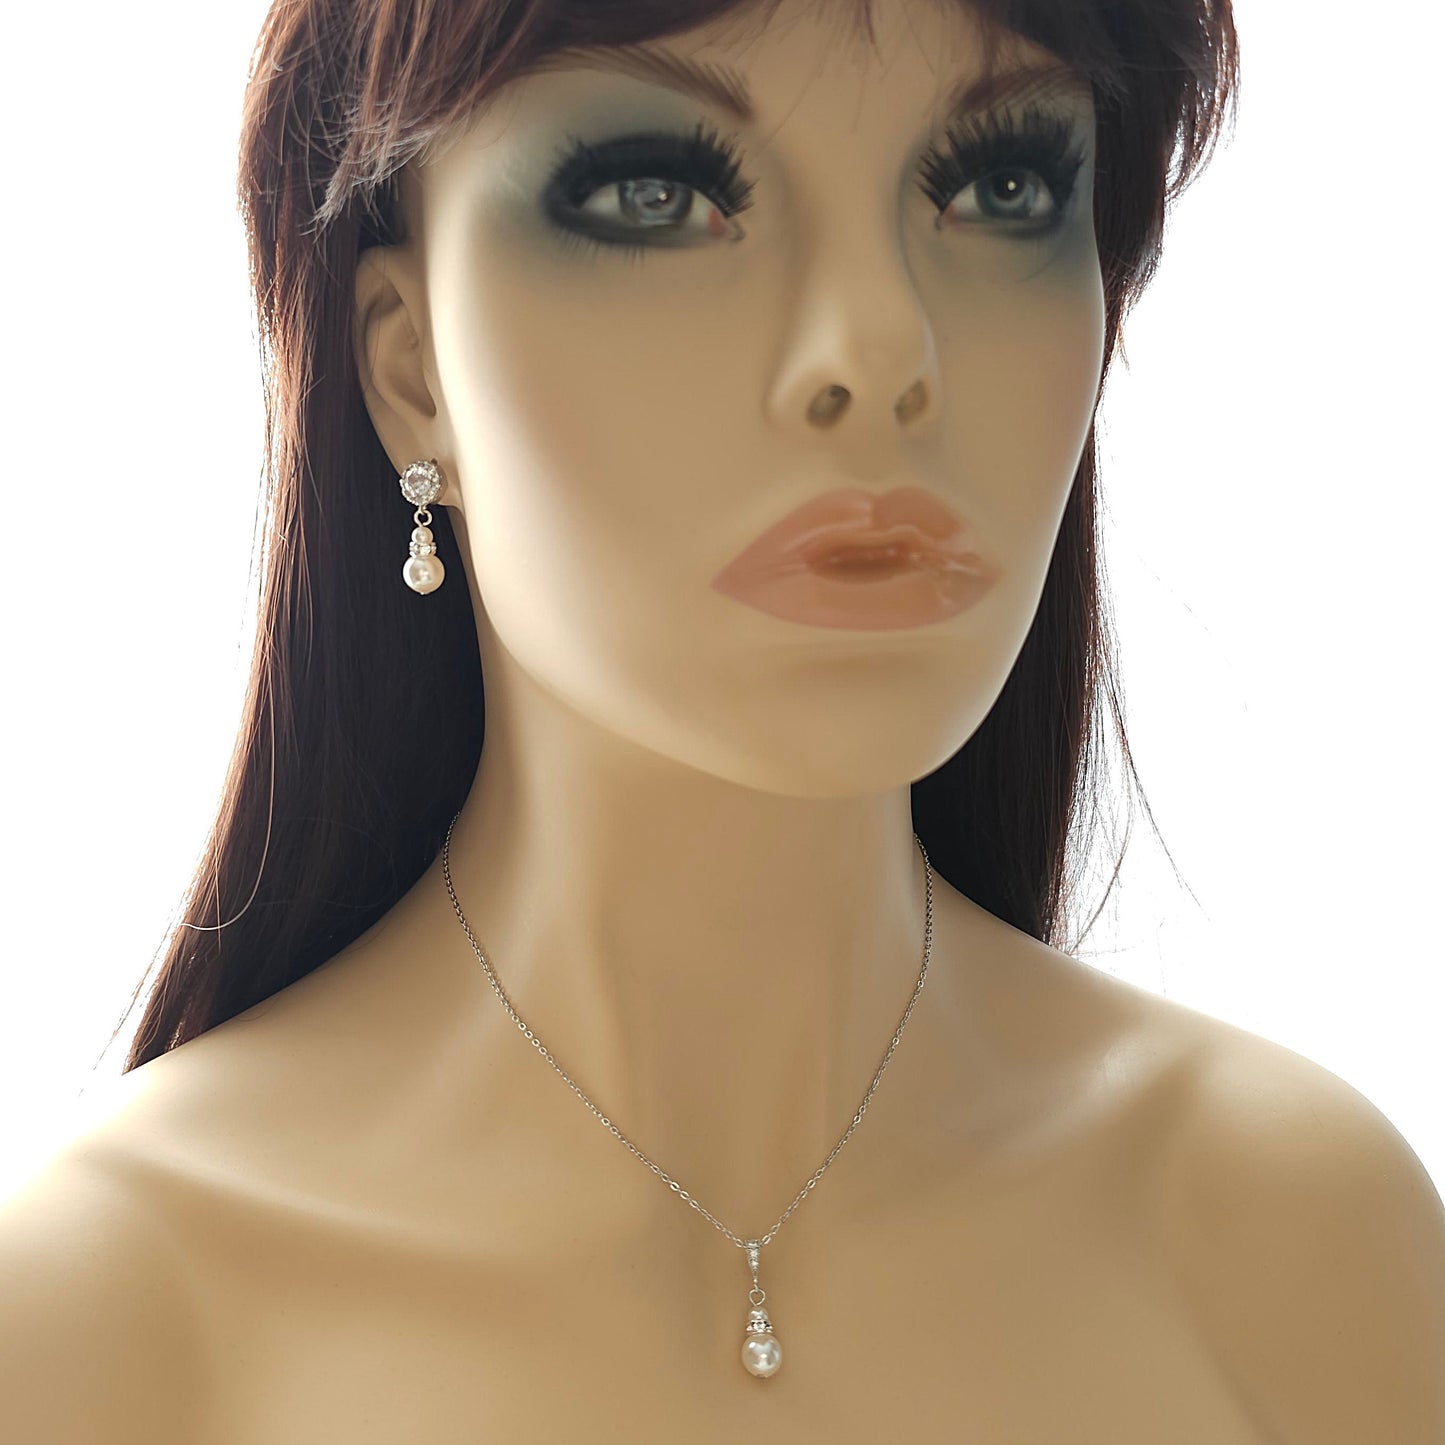 Earrings, Necklace Bracelet Set in Pearls for Weddings in Rose Gold-AVA